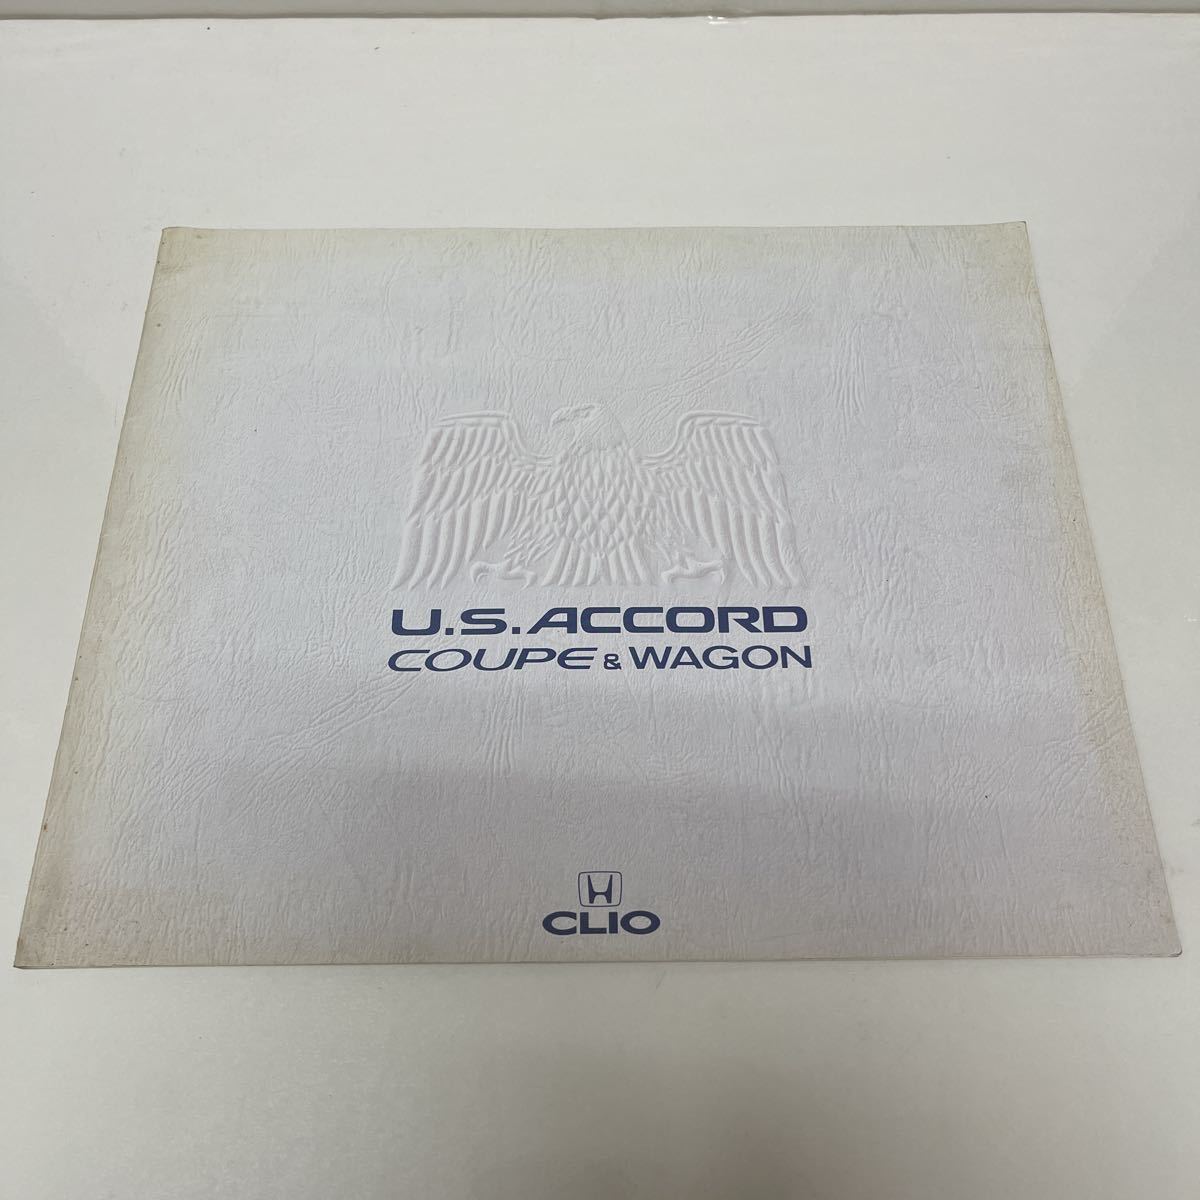 U.S. Accord купе & Wagon CB6 CB7 CB9 проспект каталог clio CLIO